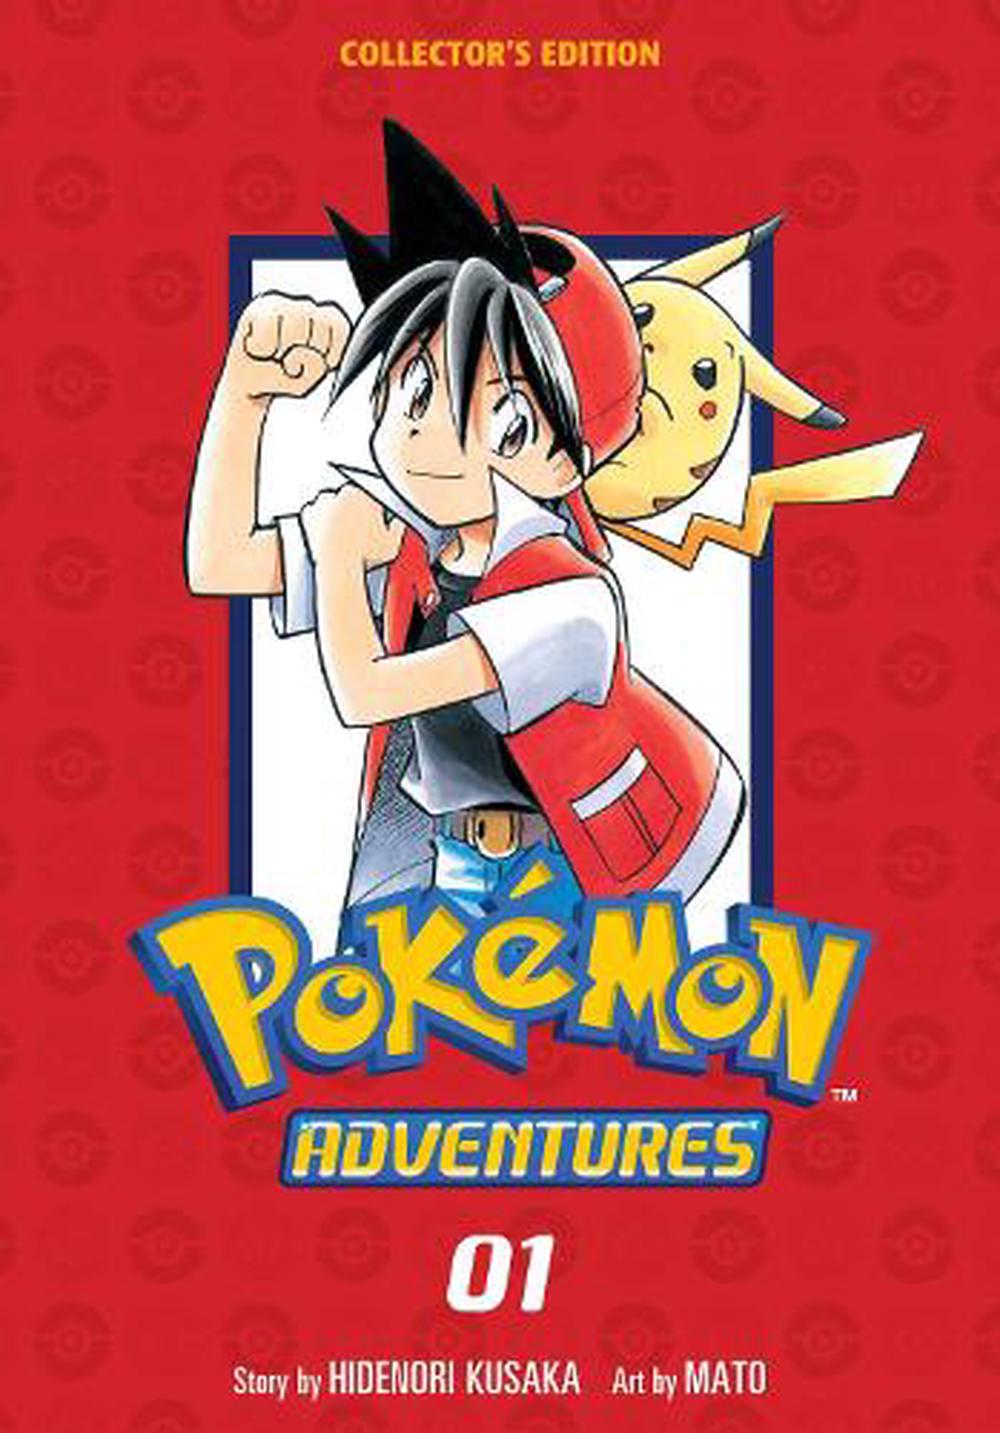 Pokemon Adventures: Diamond and Pearl/Platinum Manga Volume 3